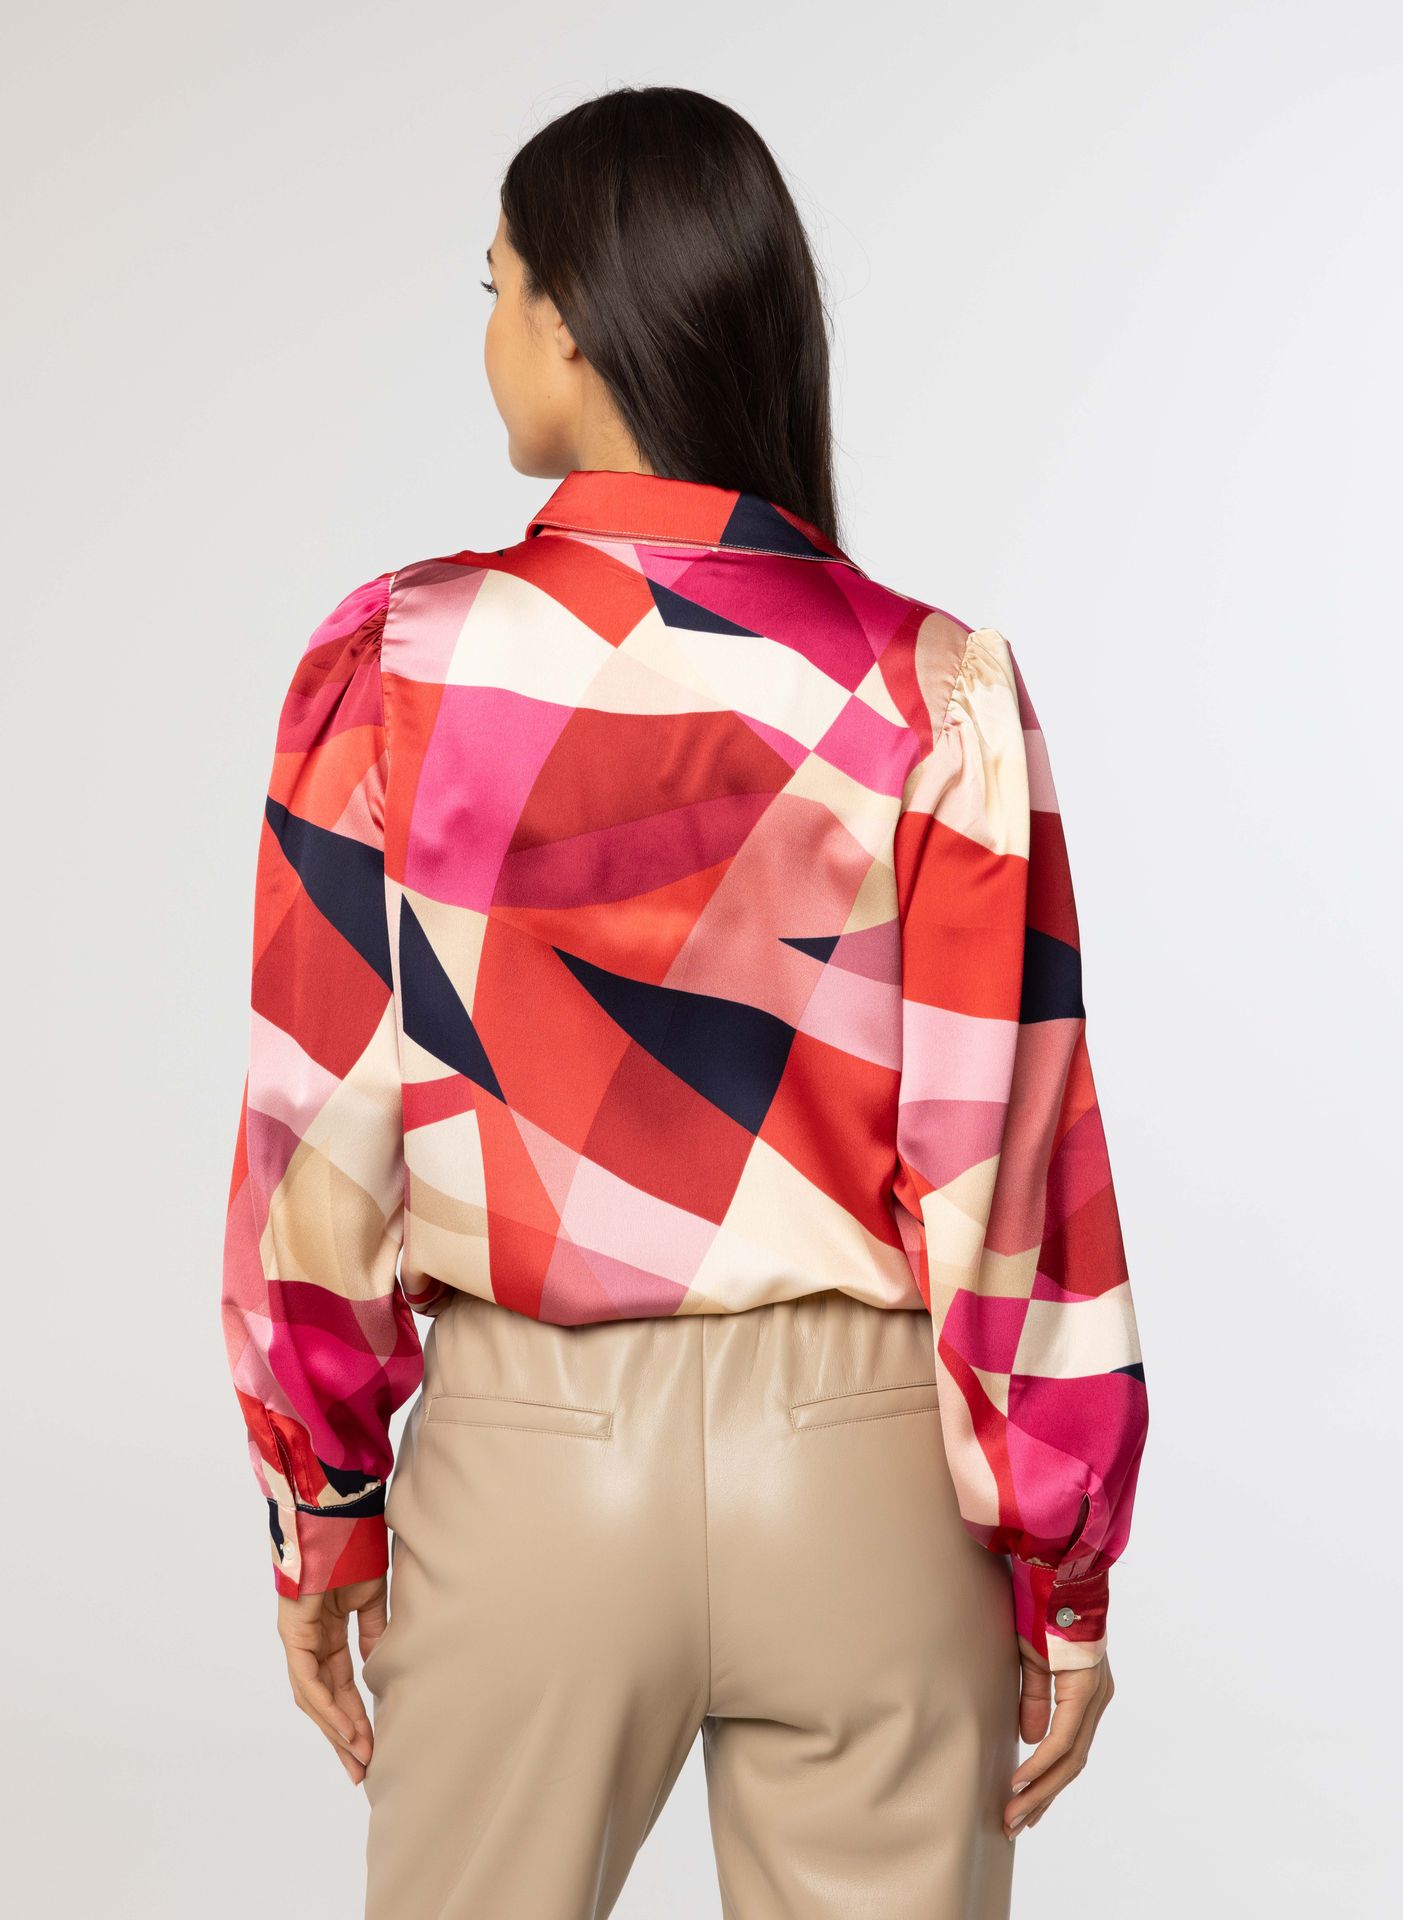 Norah Meerkleurige blouse roze multicolor 214291-002